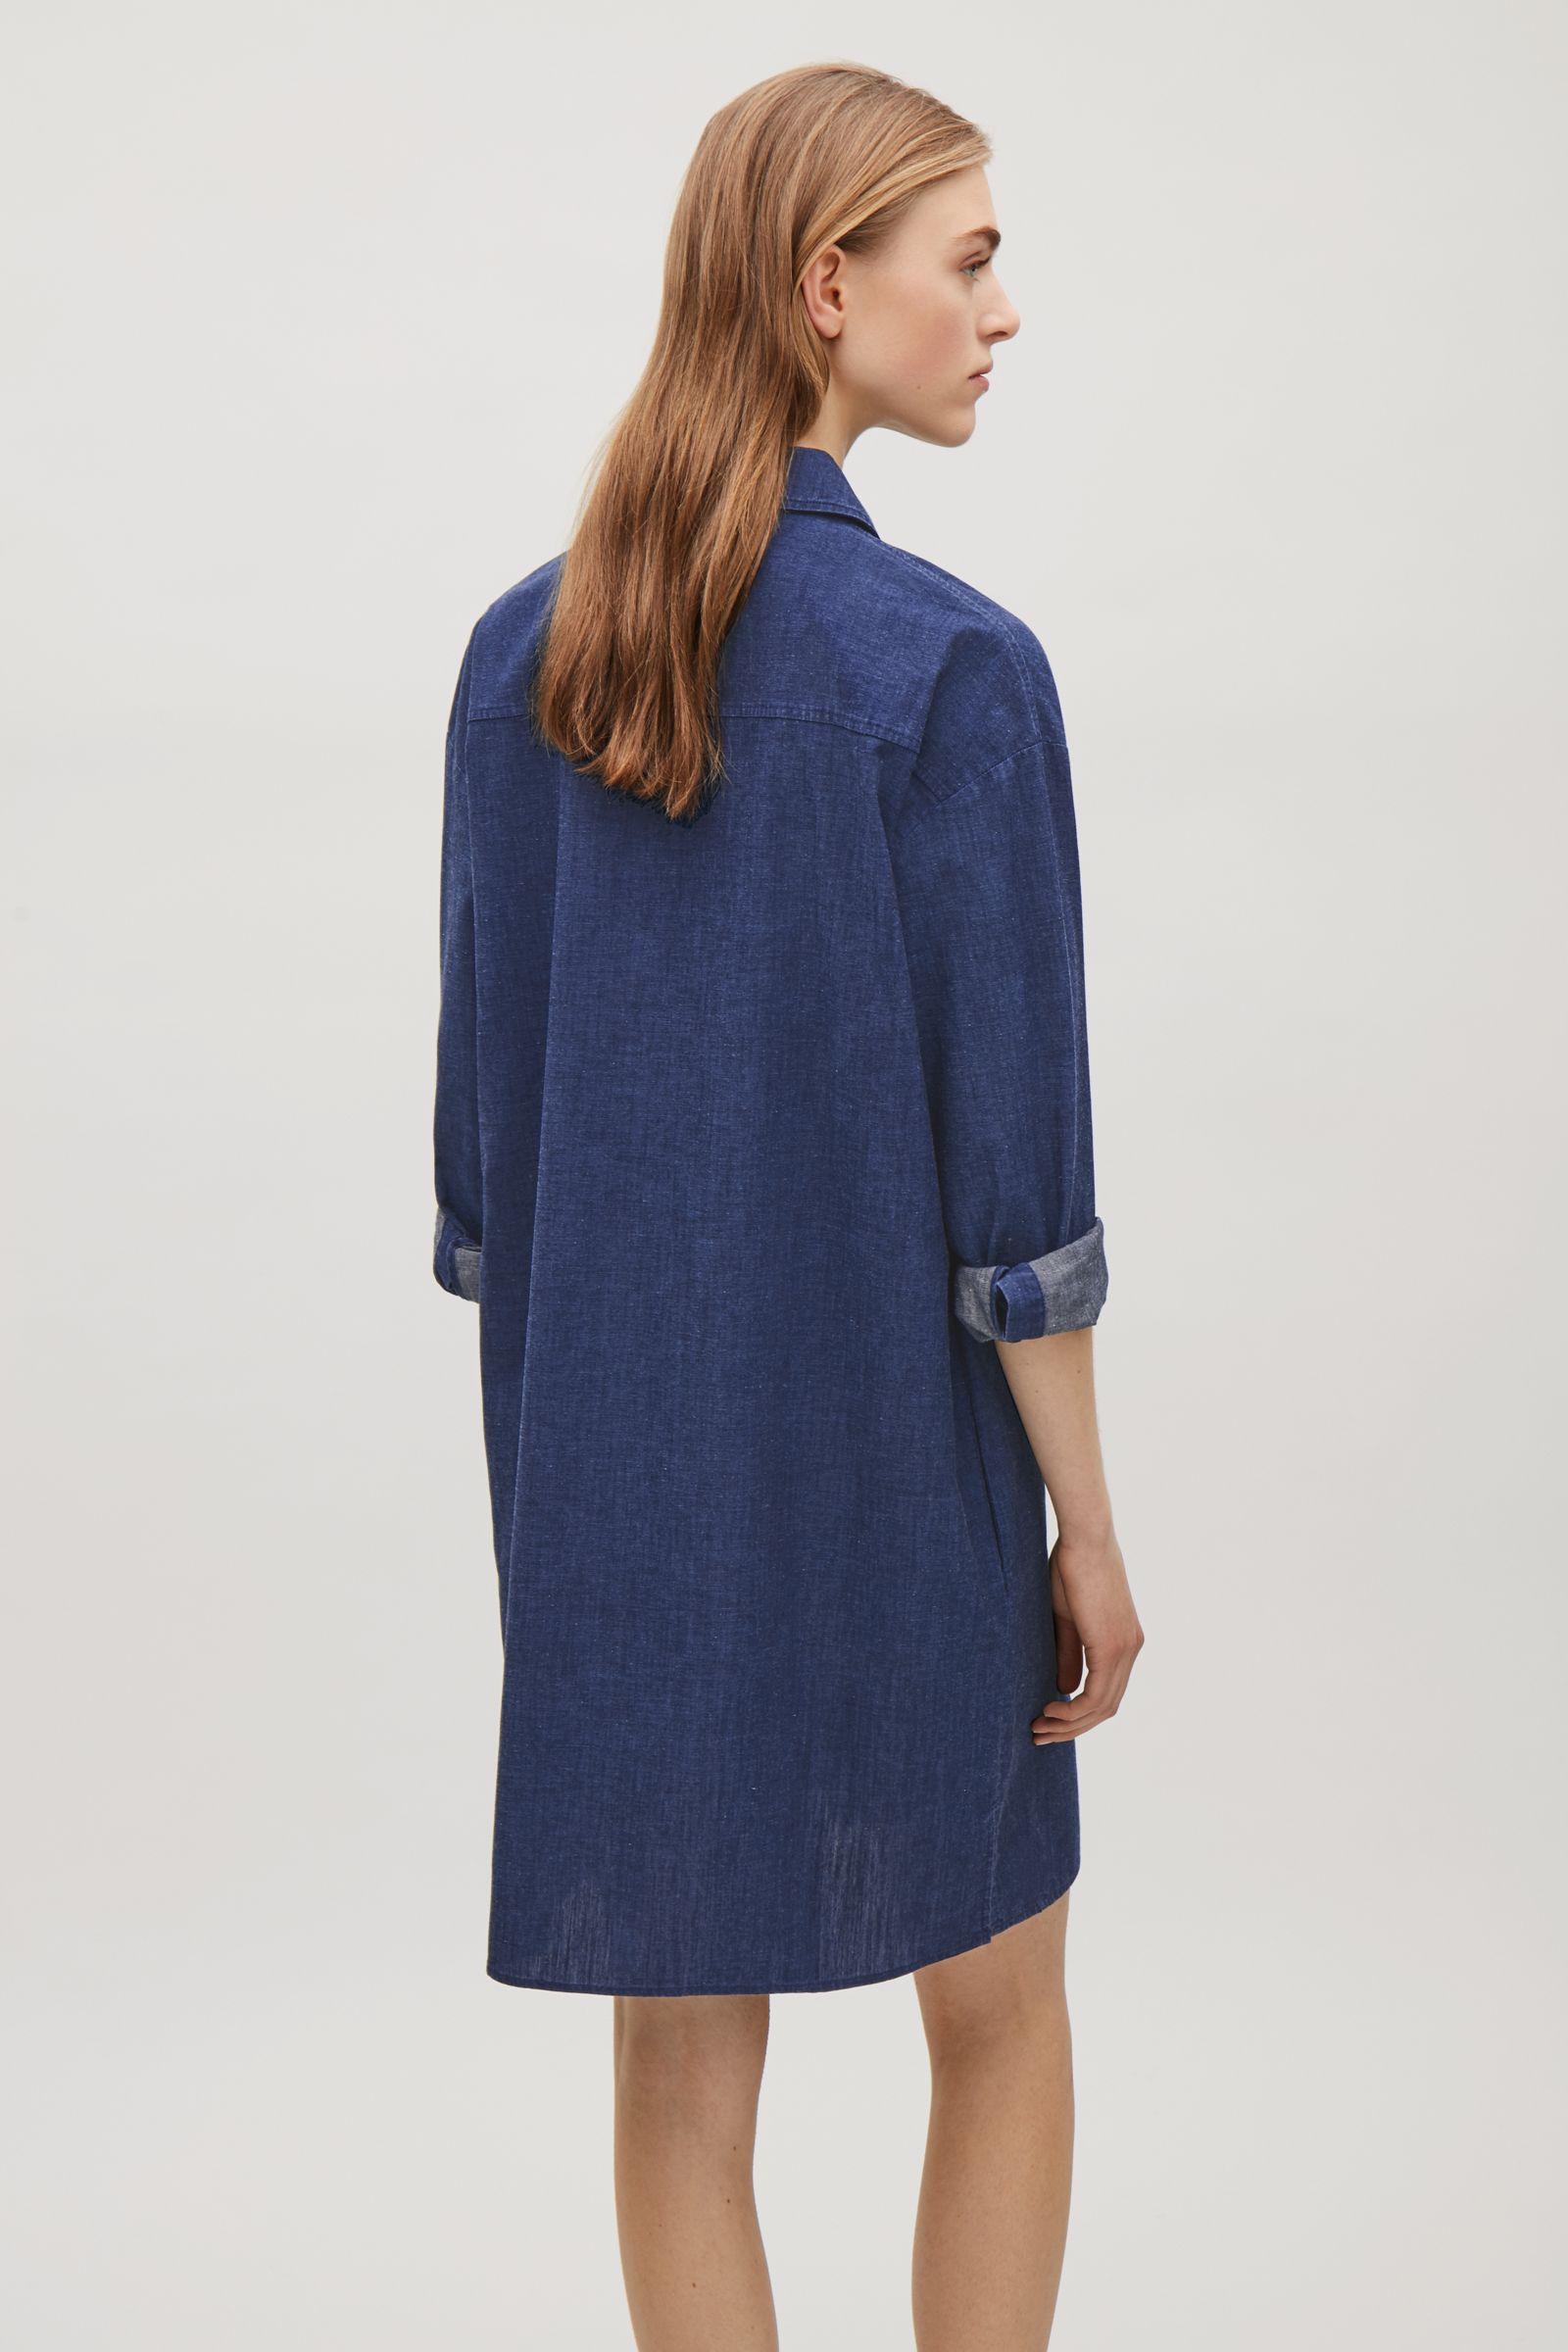 COS Cotton-denim Shirt Dress in Blue - Lyst